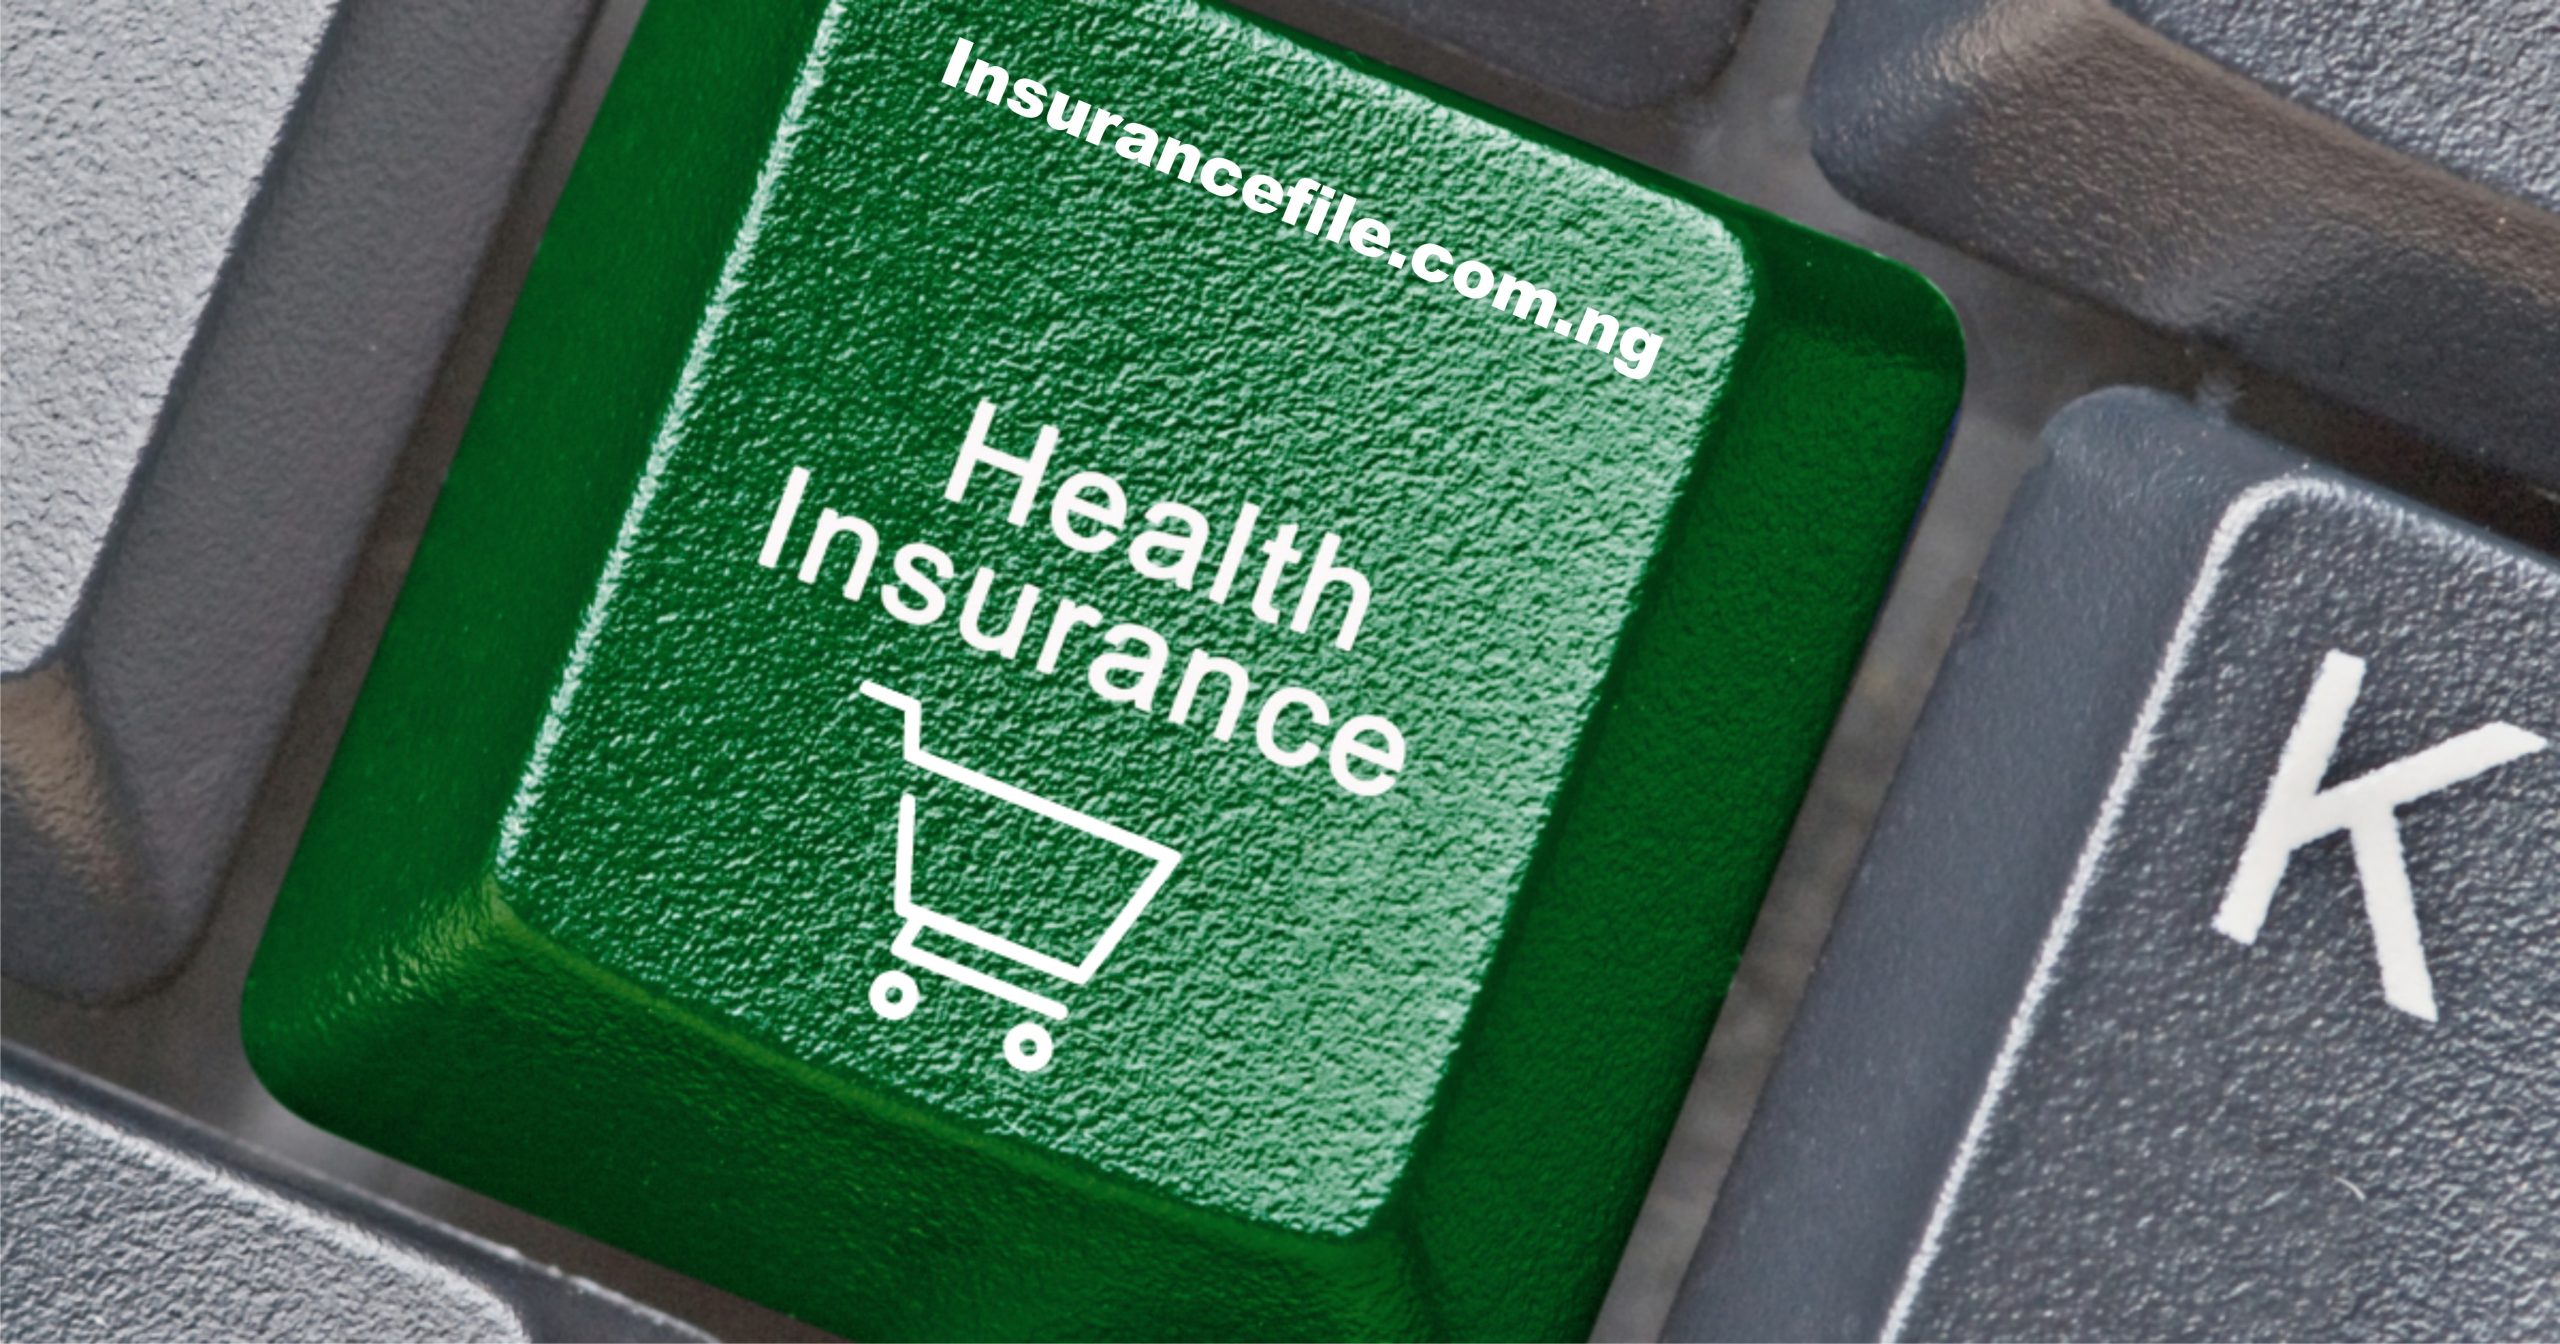 Exploring the Health Insurance Marketplace